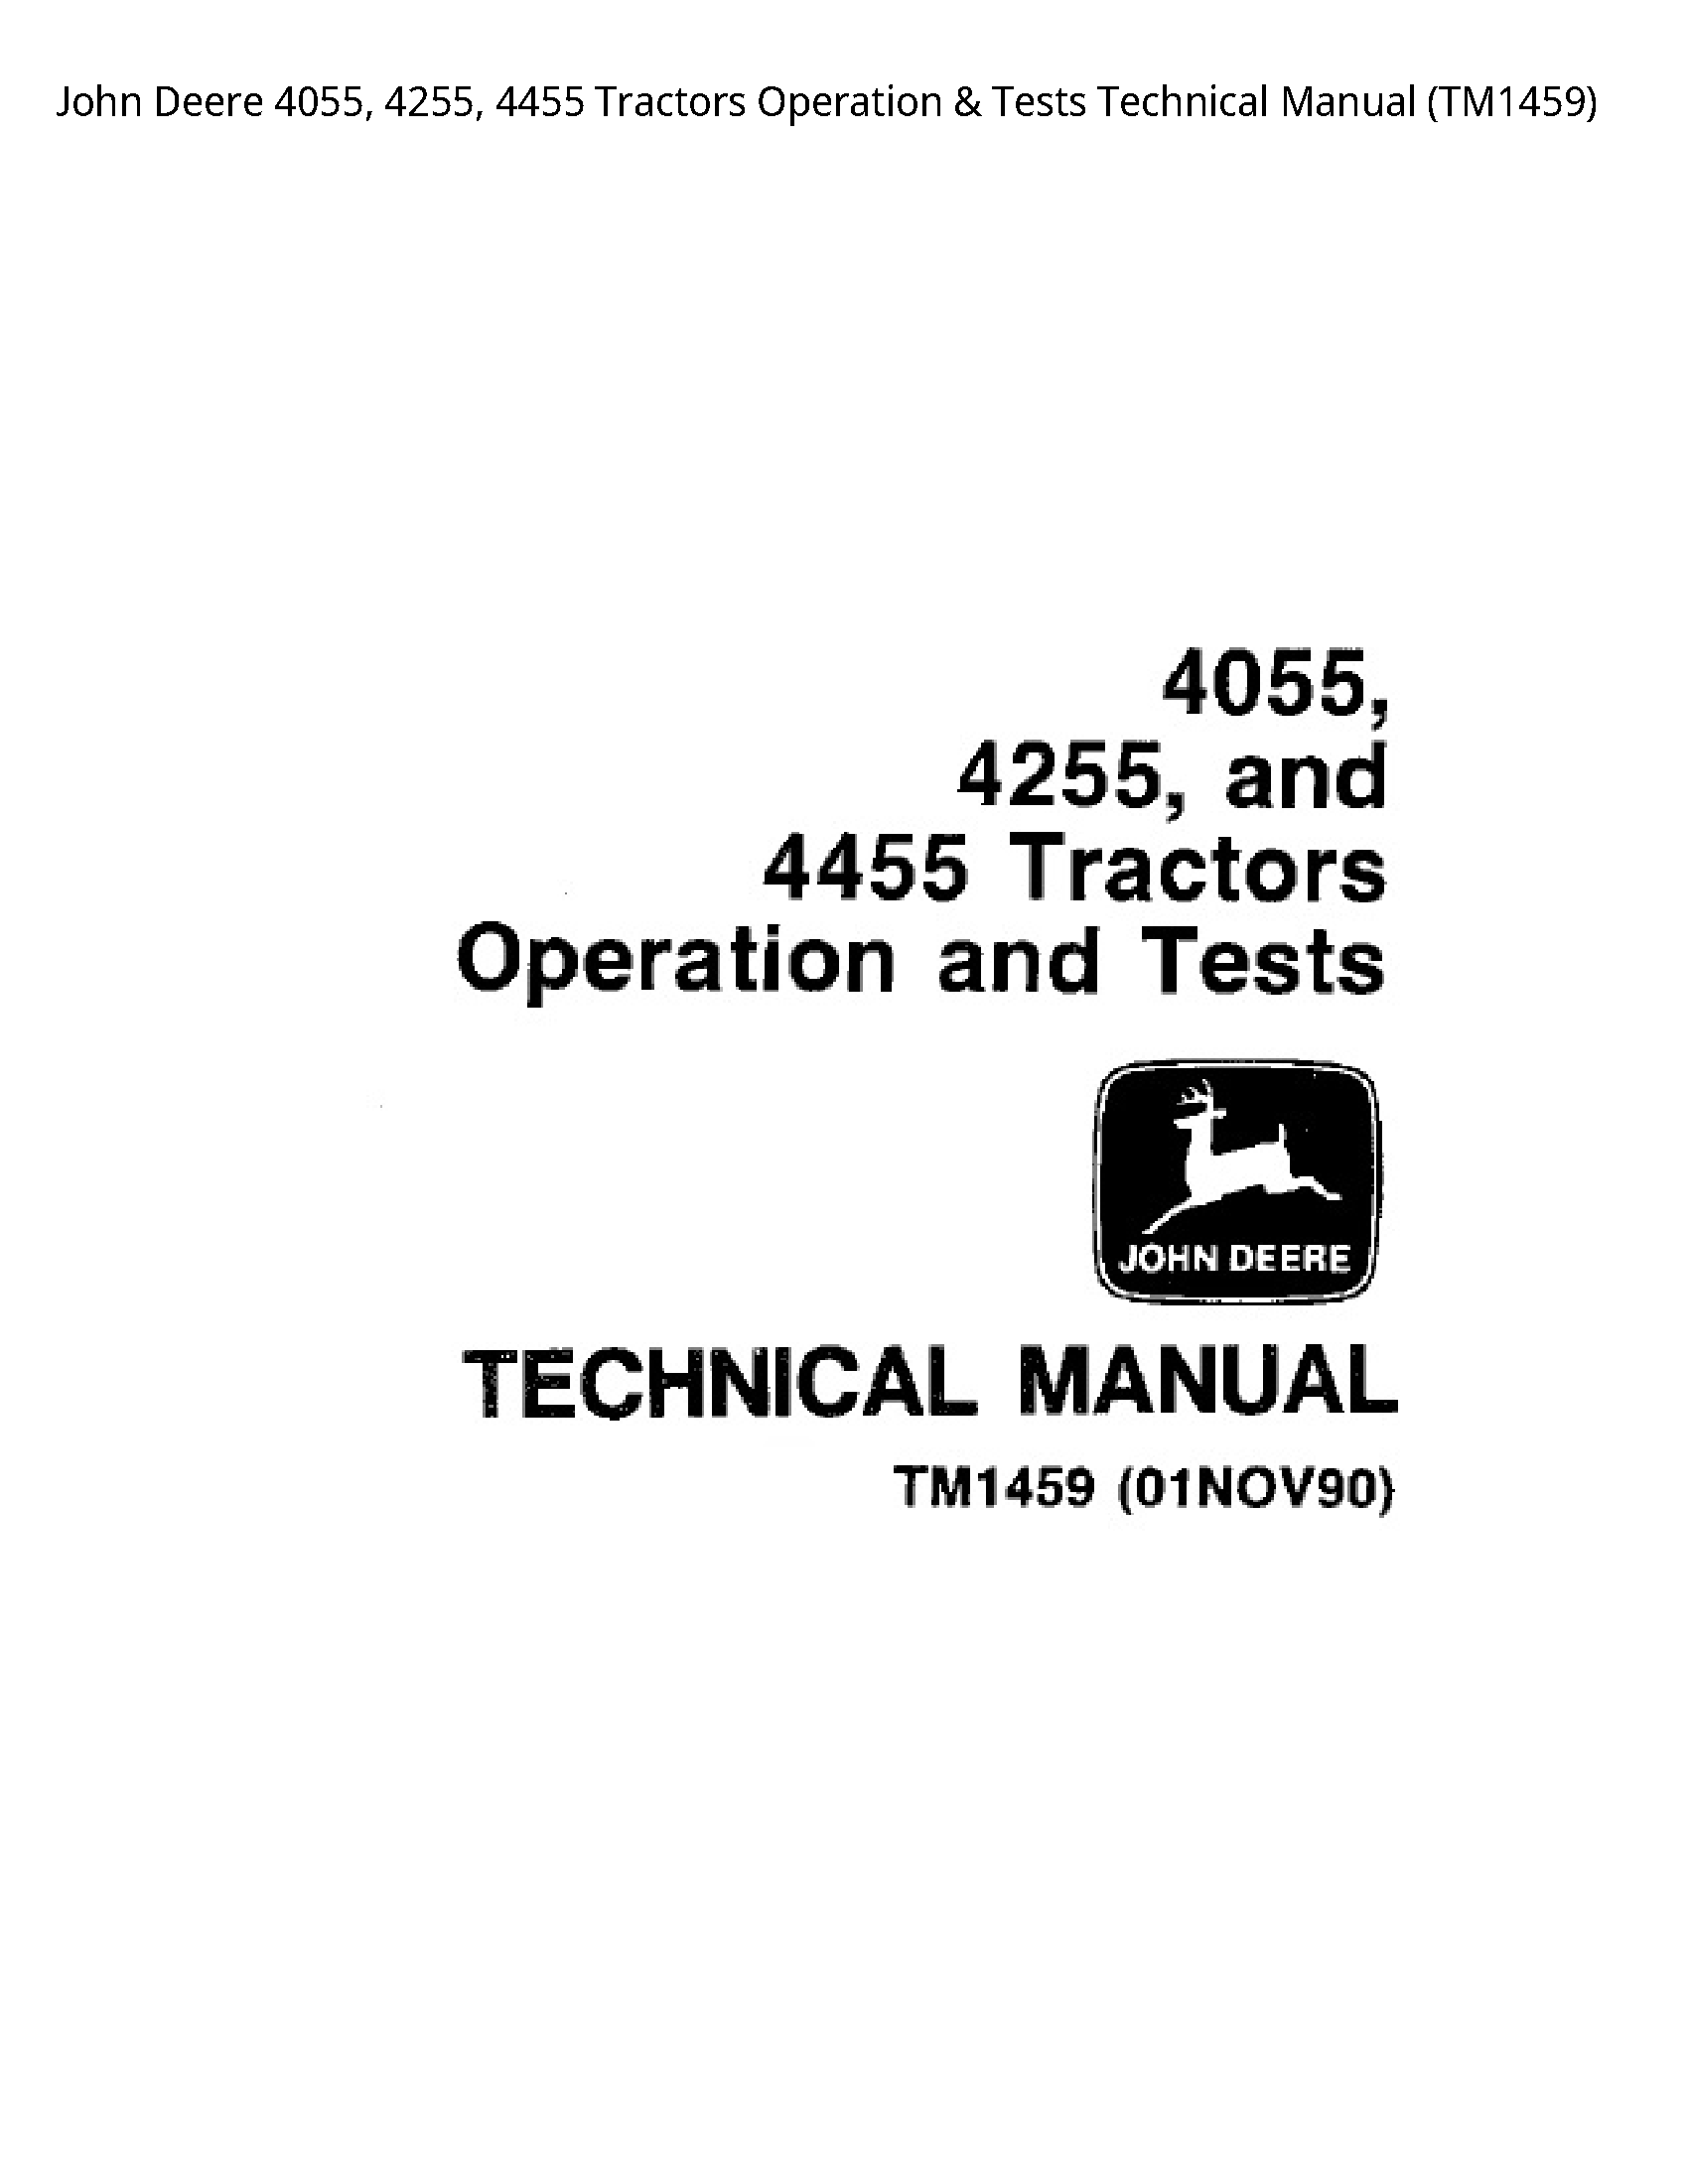 John Deere 4055 Tractors Operation Tests Technical manual